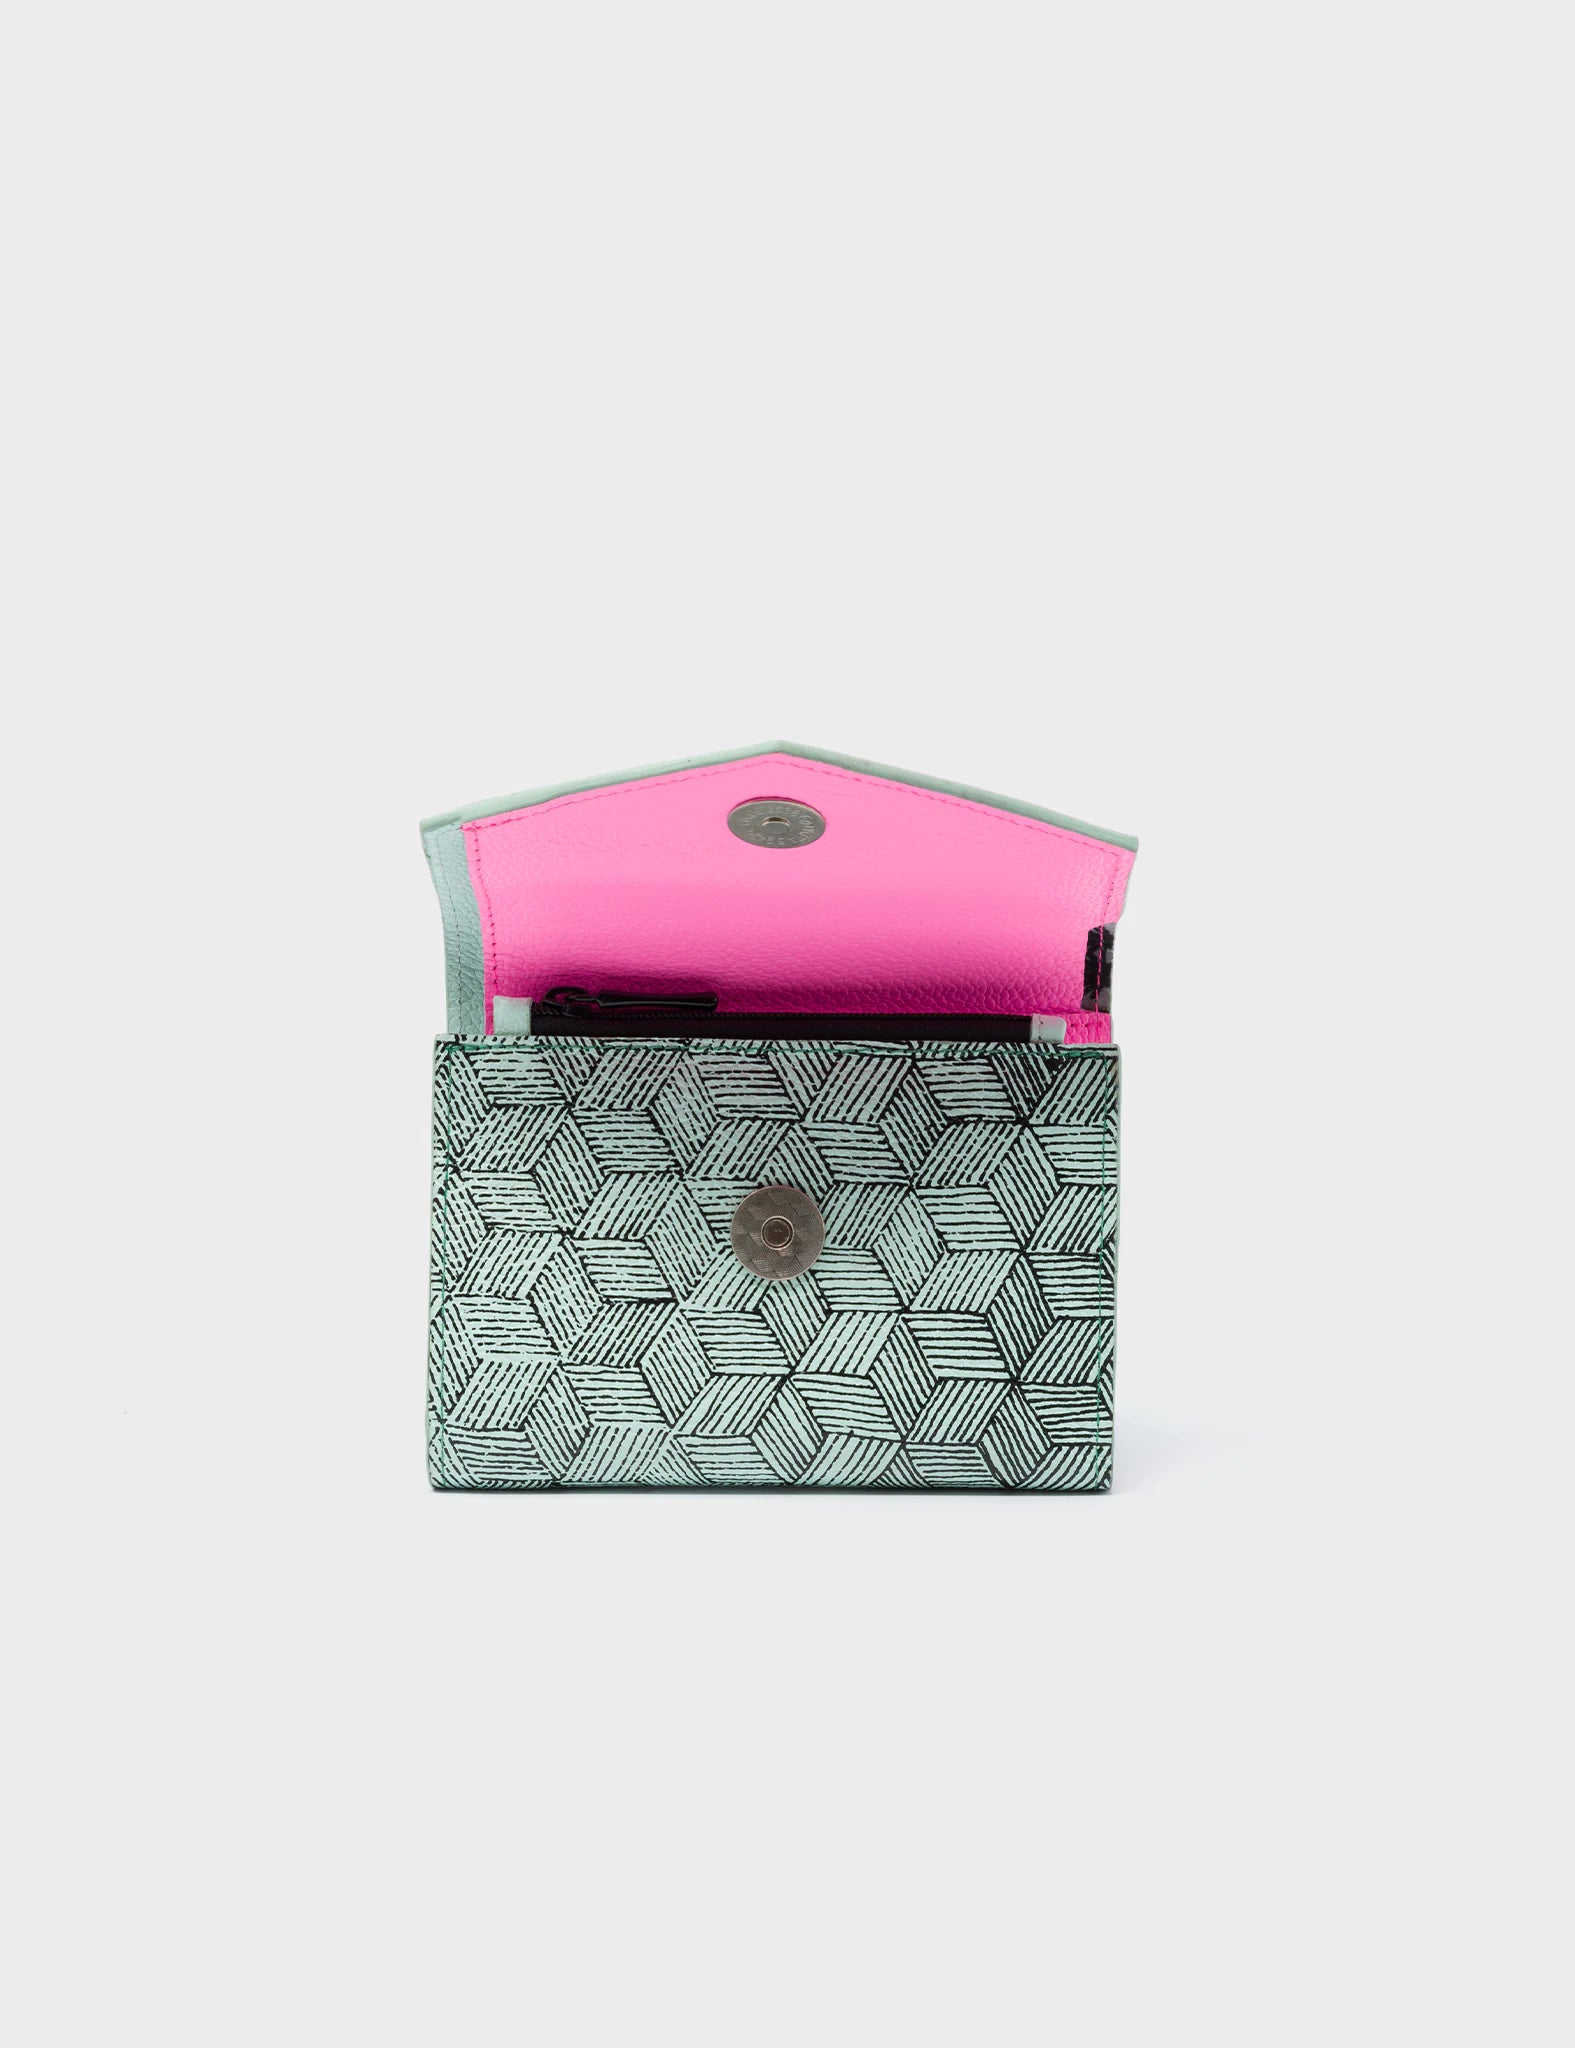 Fiona Biscay Green Leather Wallet - El Trópico Print Design - Flap